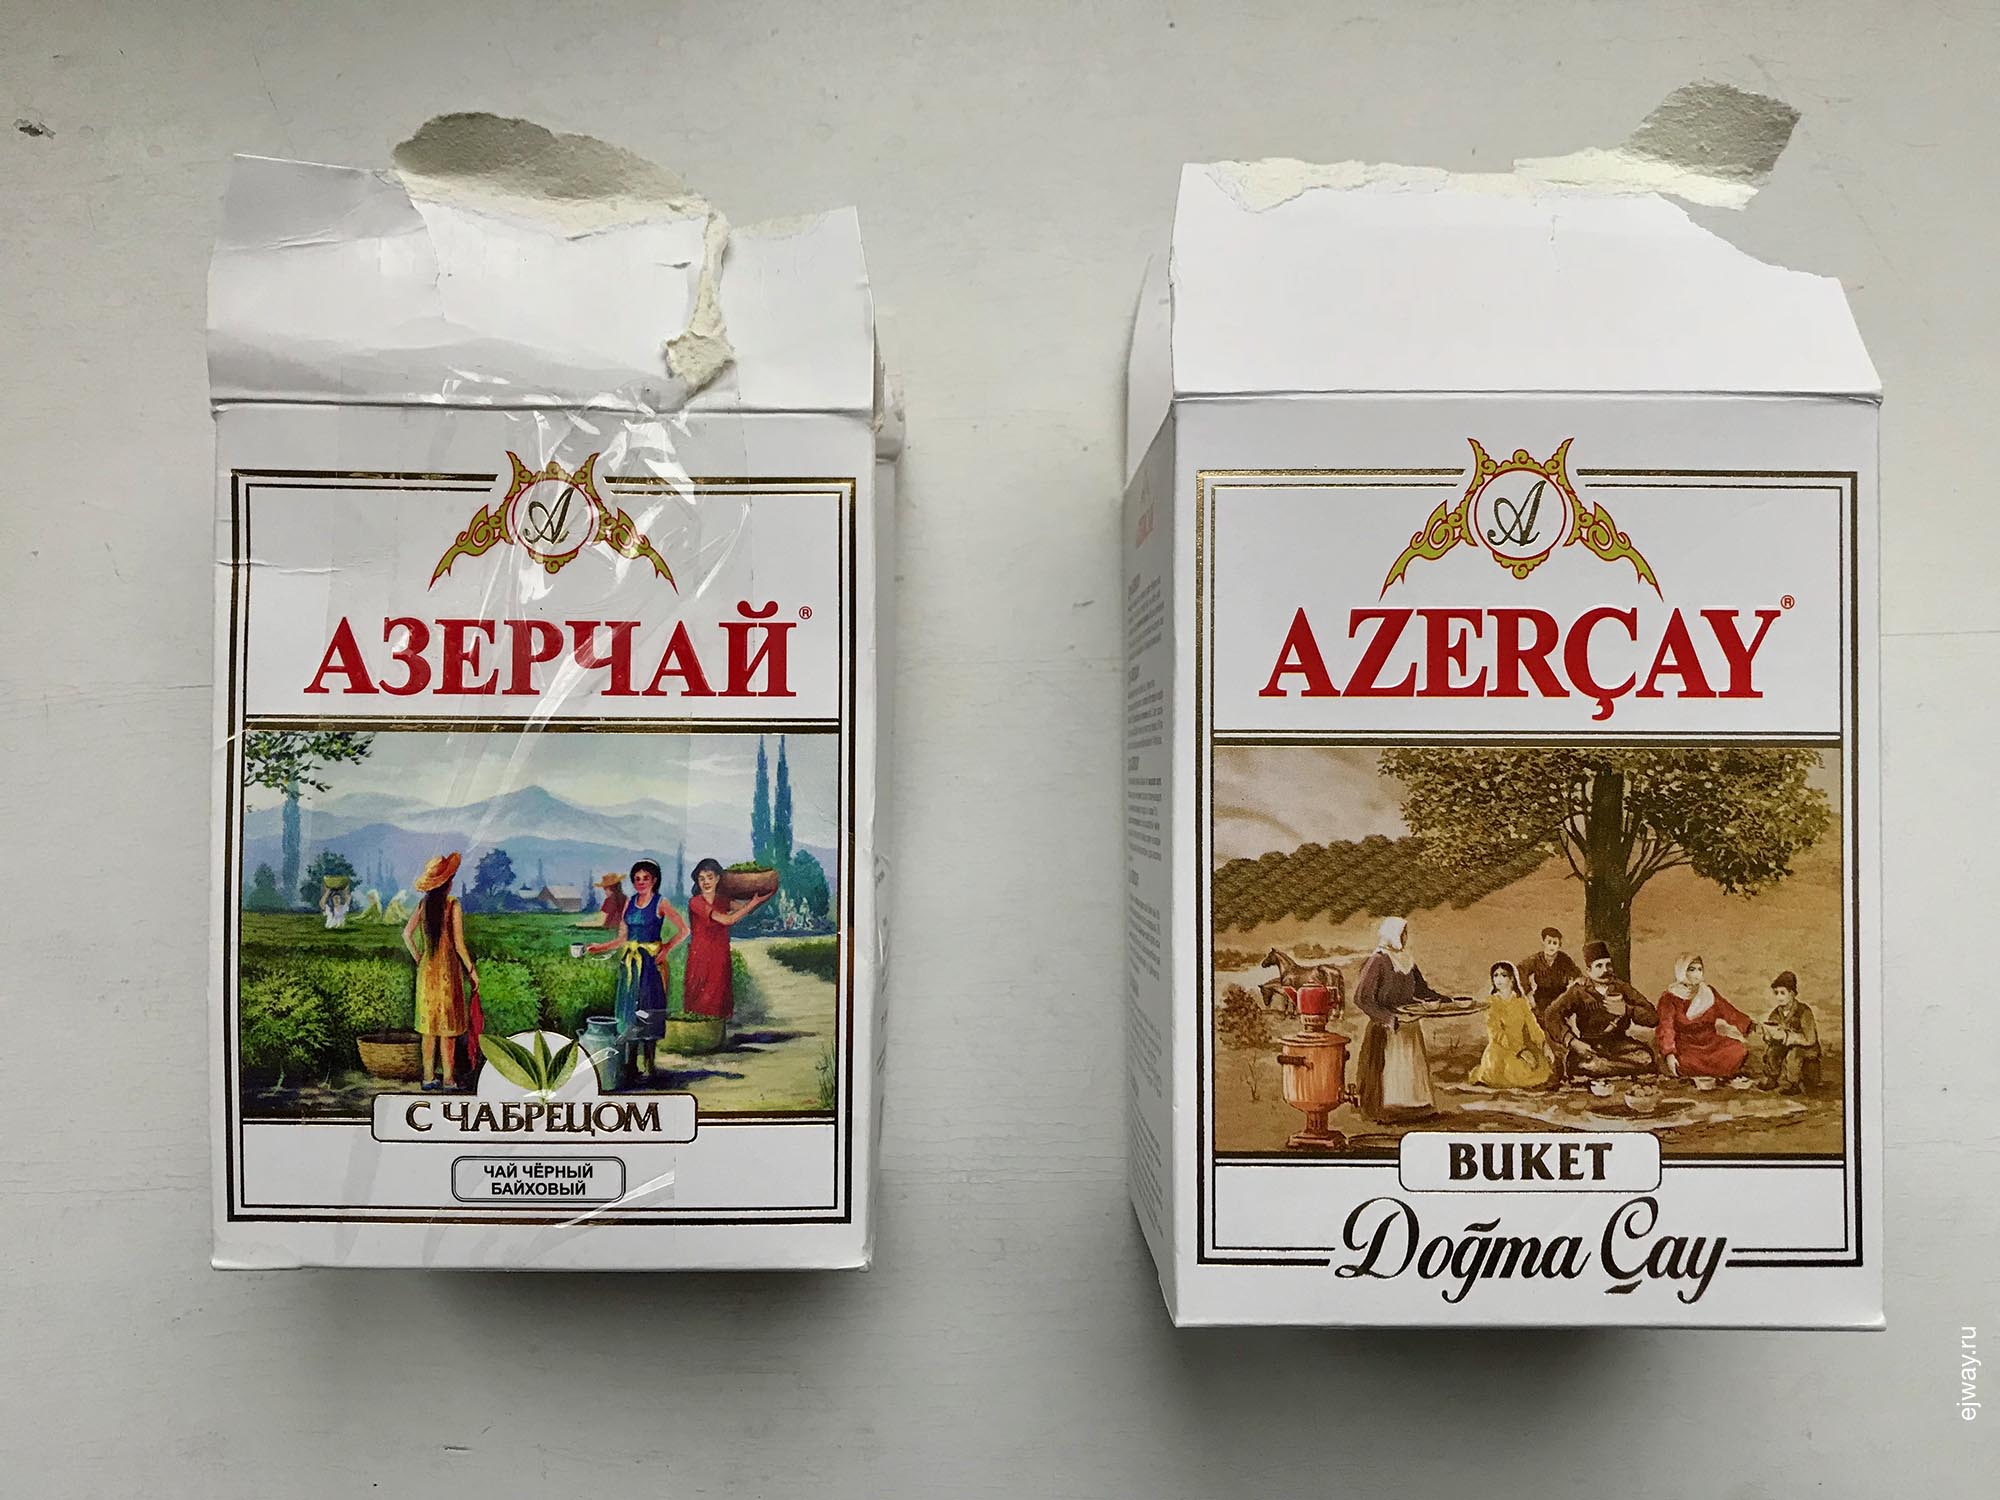 Россия, Москва, Азерчай, ejway.ru, азерчай, чай, упаковка